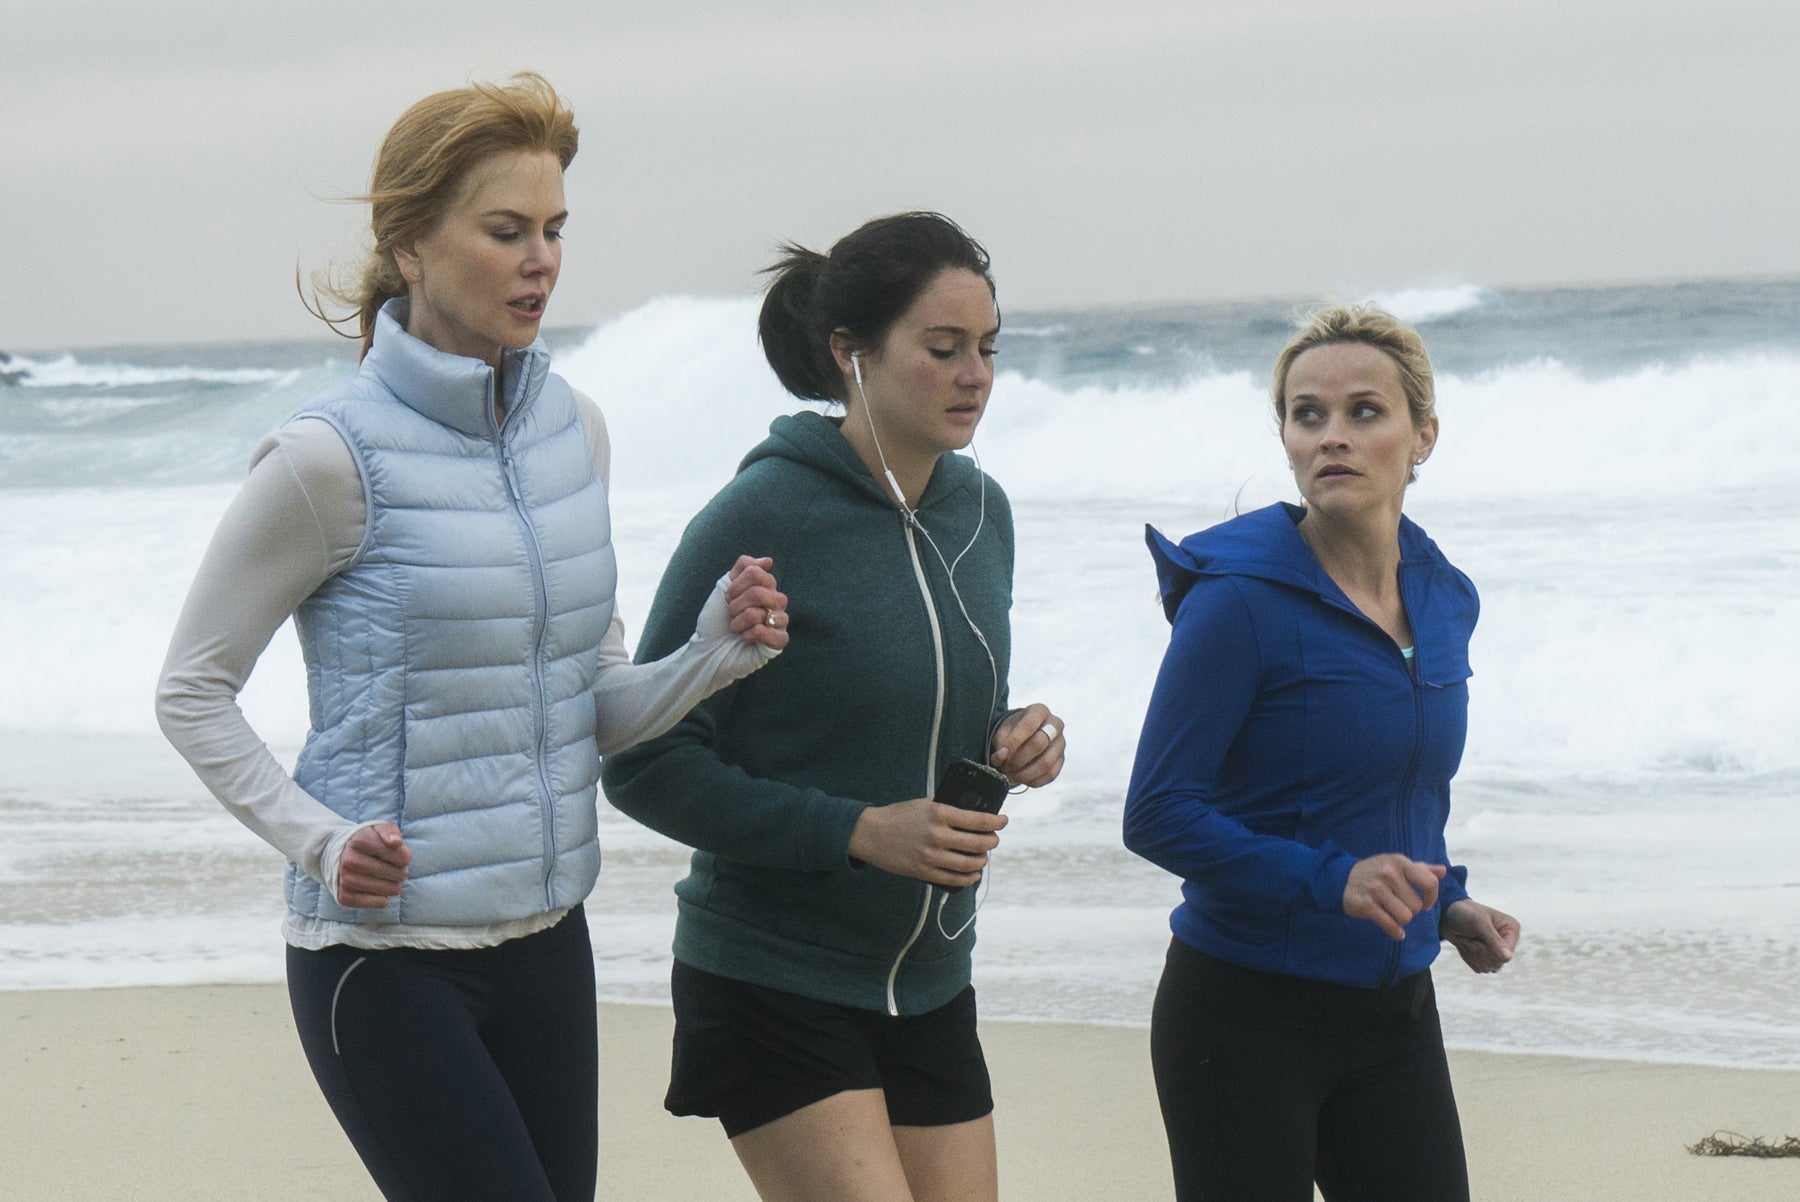 Jane, Madeline, and Celeste run along the beach.